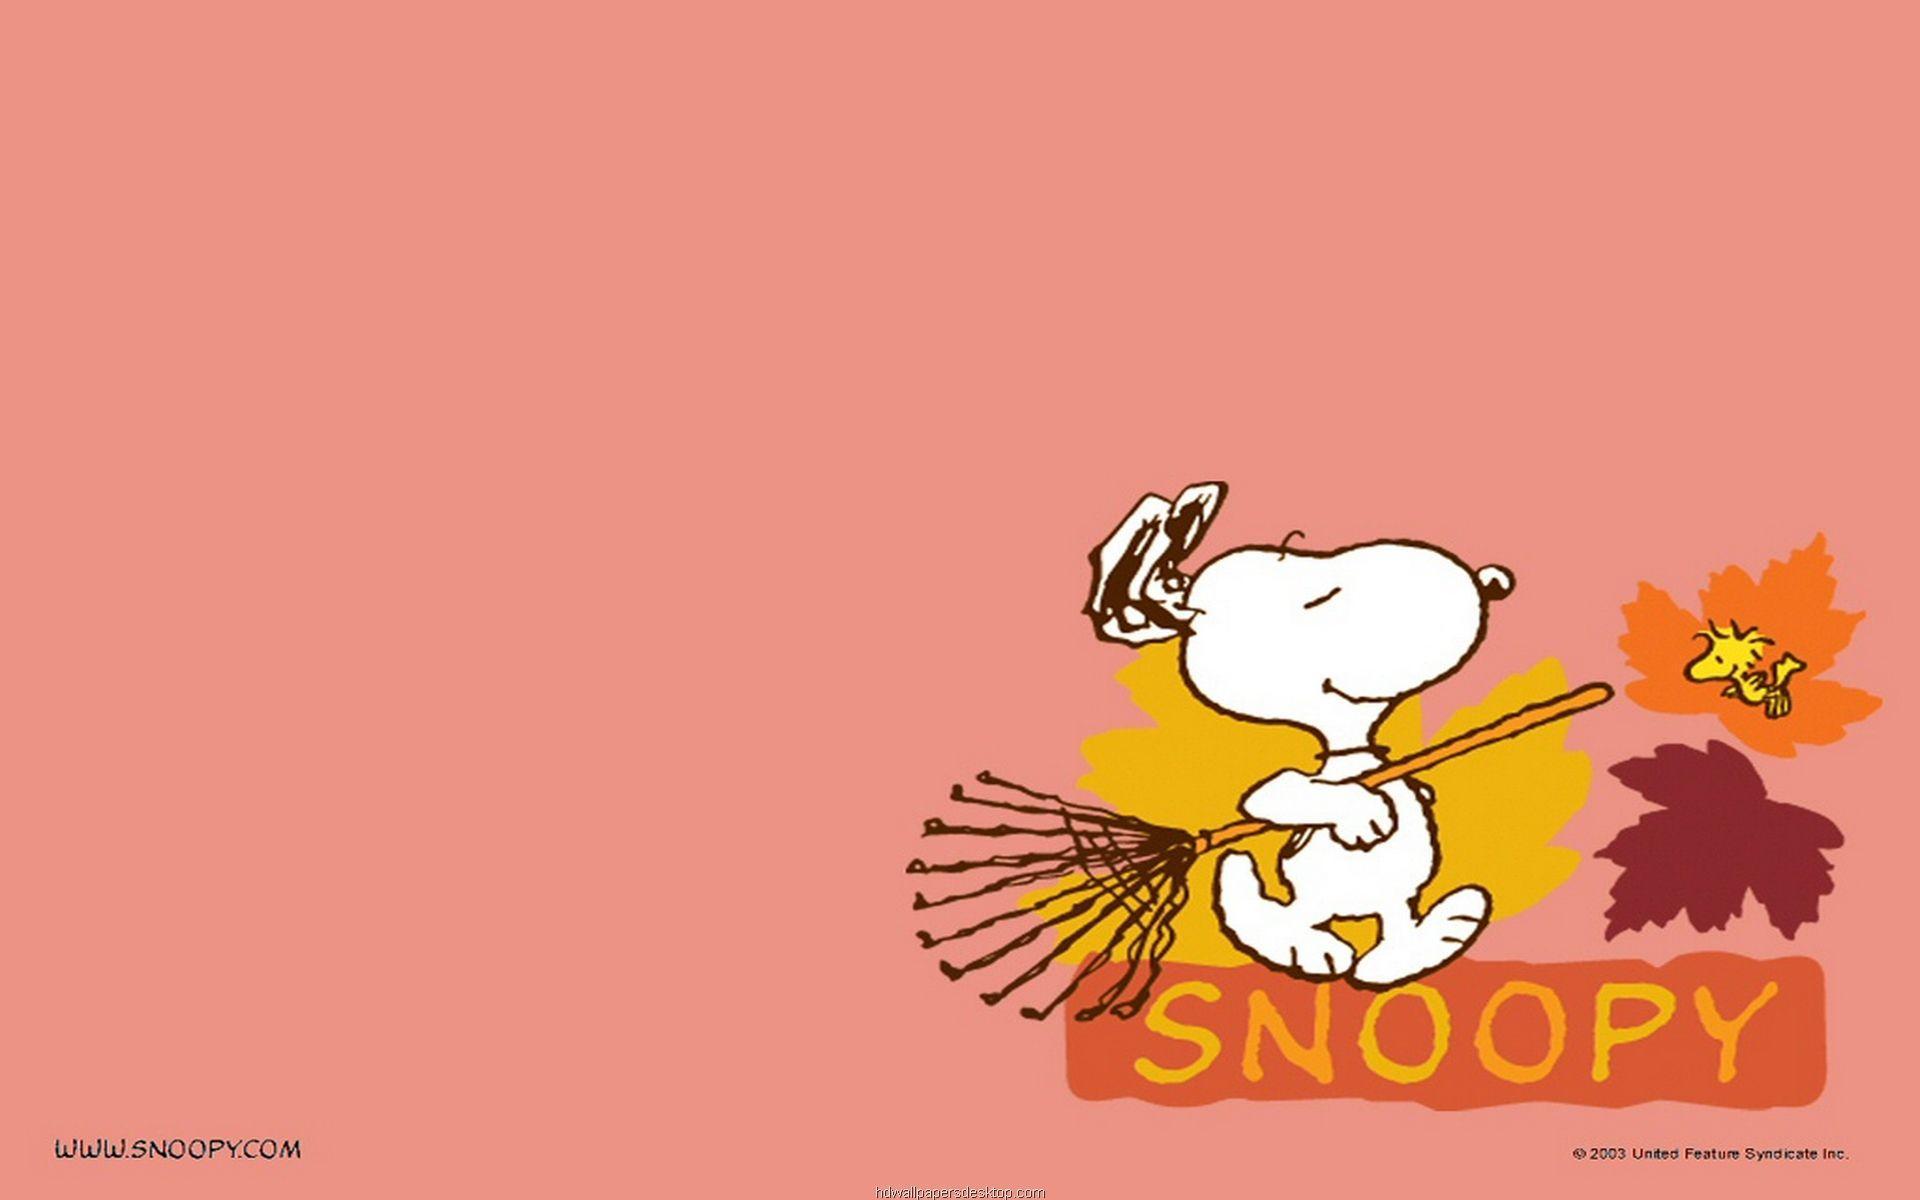 Snoopy Wallpaper. Large HD Wallpaper Database